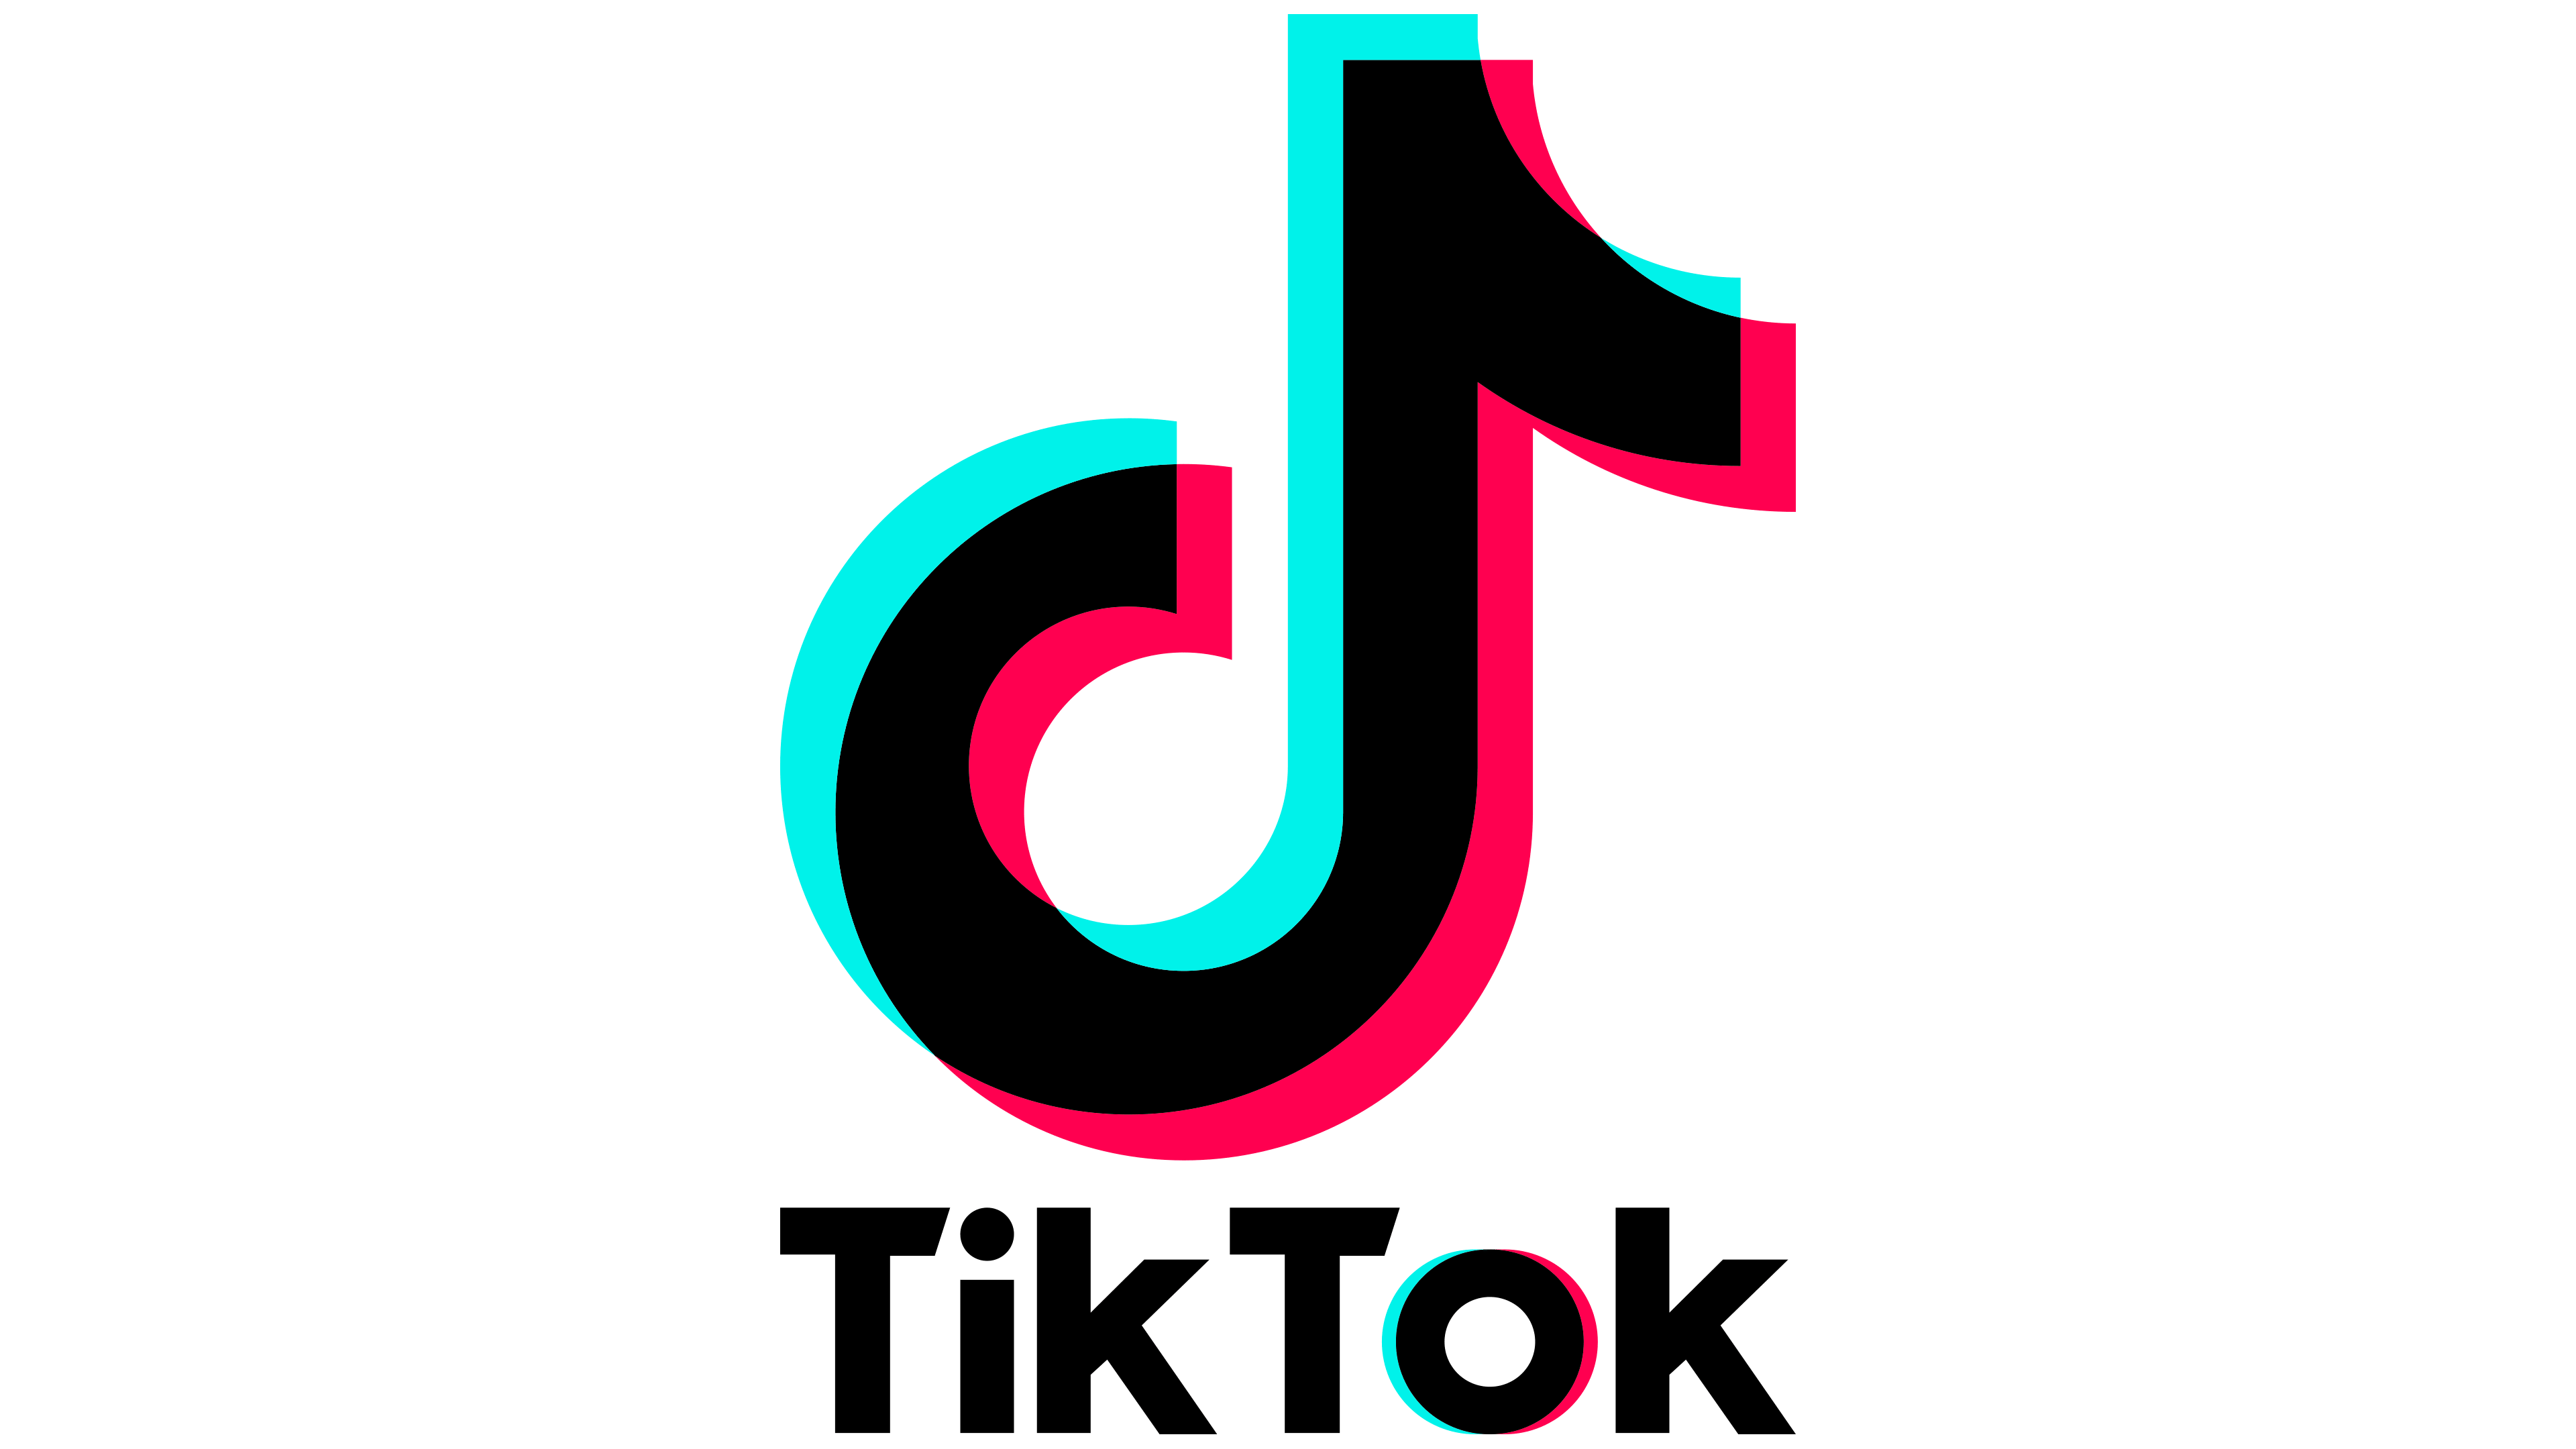 TikTok logo PNG images descarga gratuita